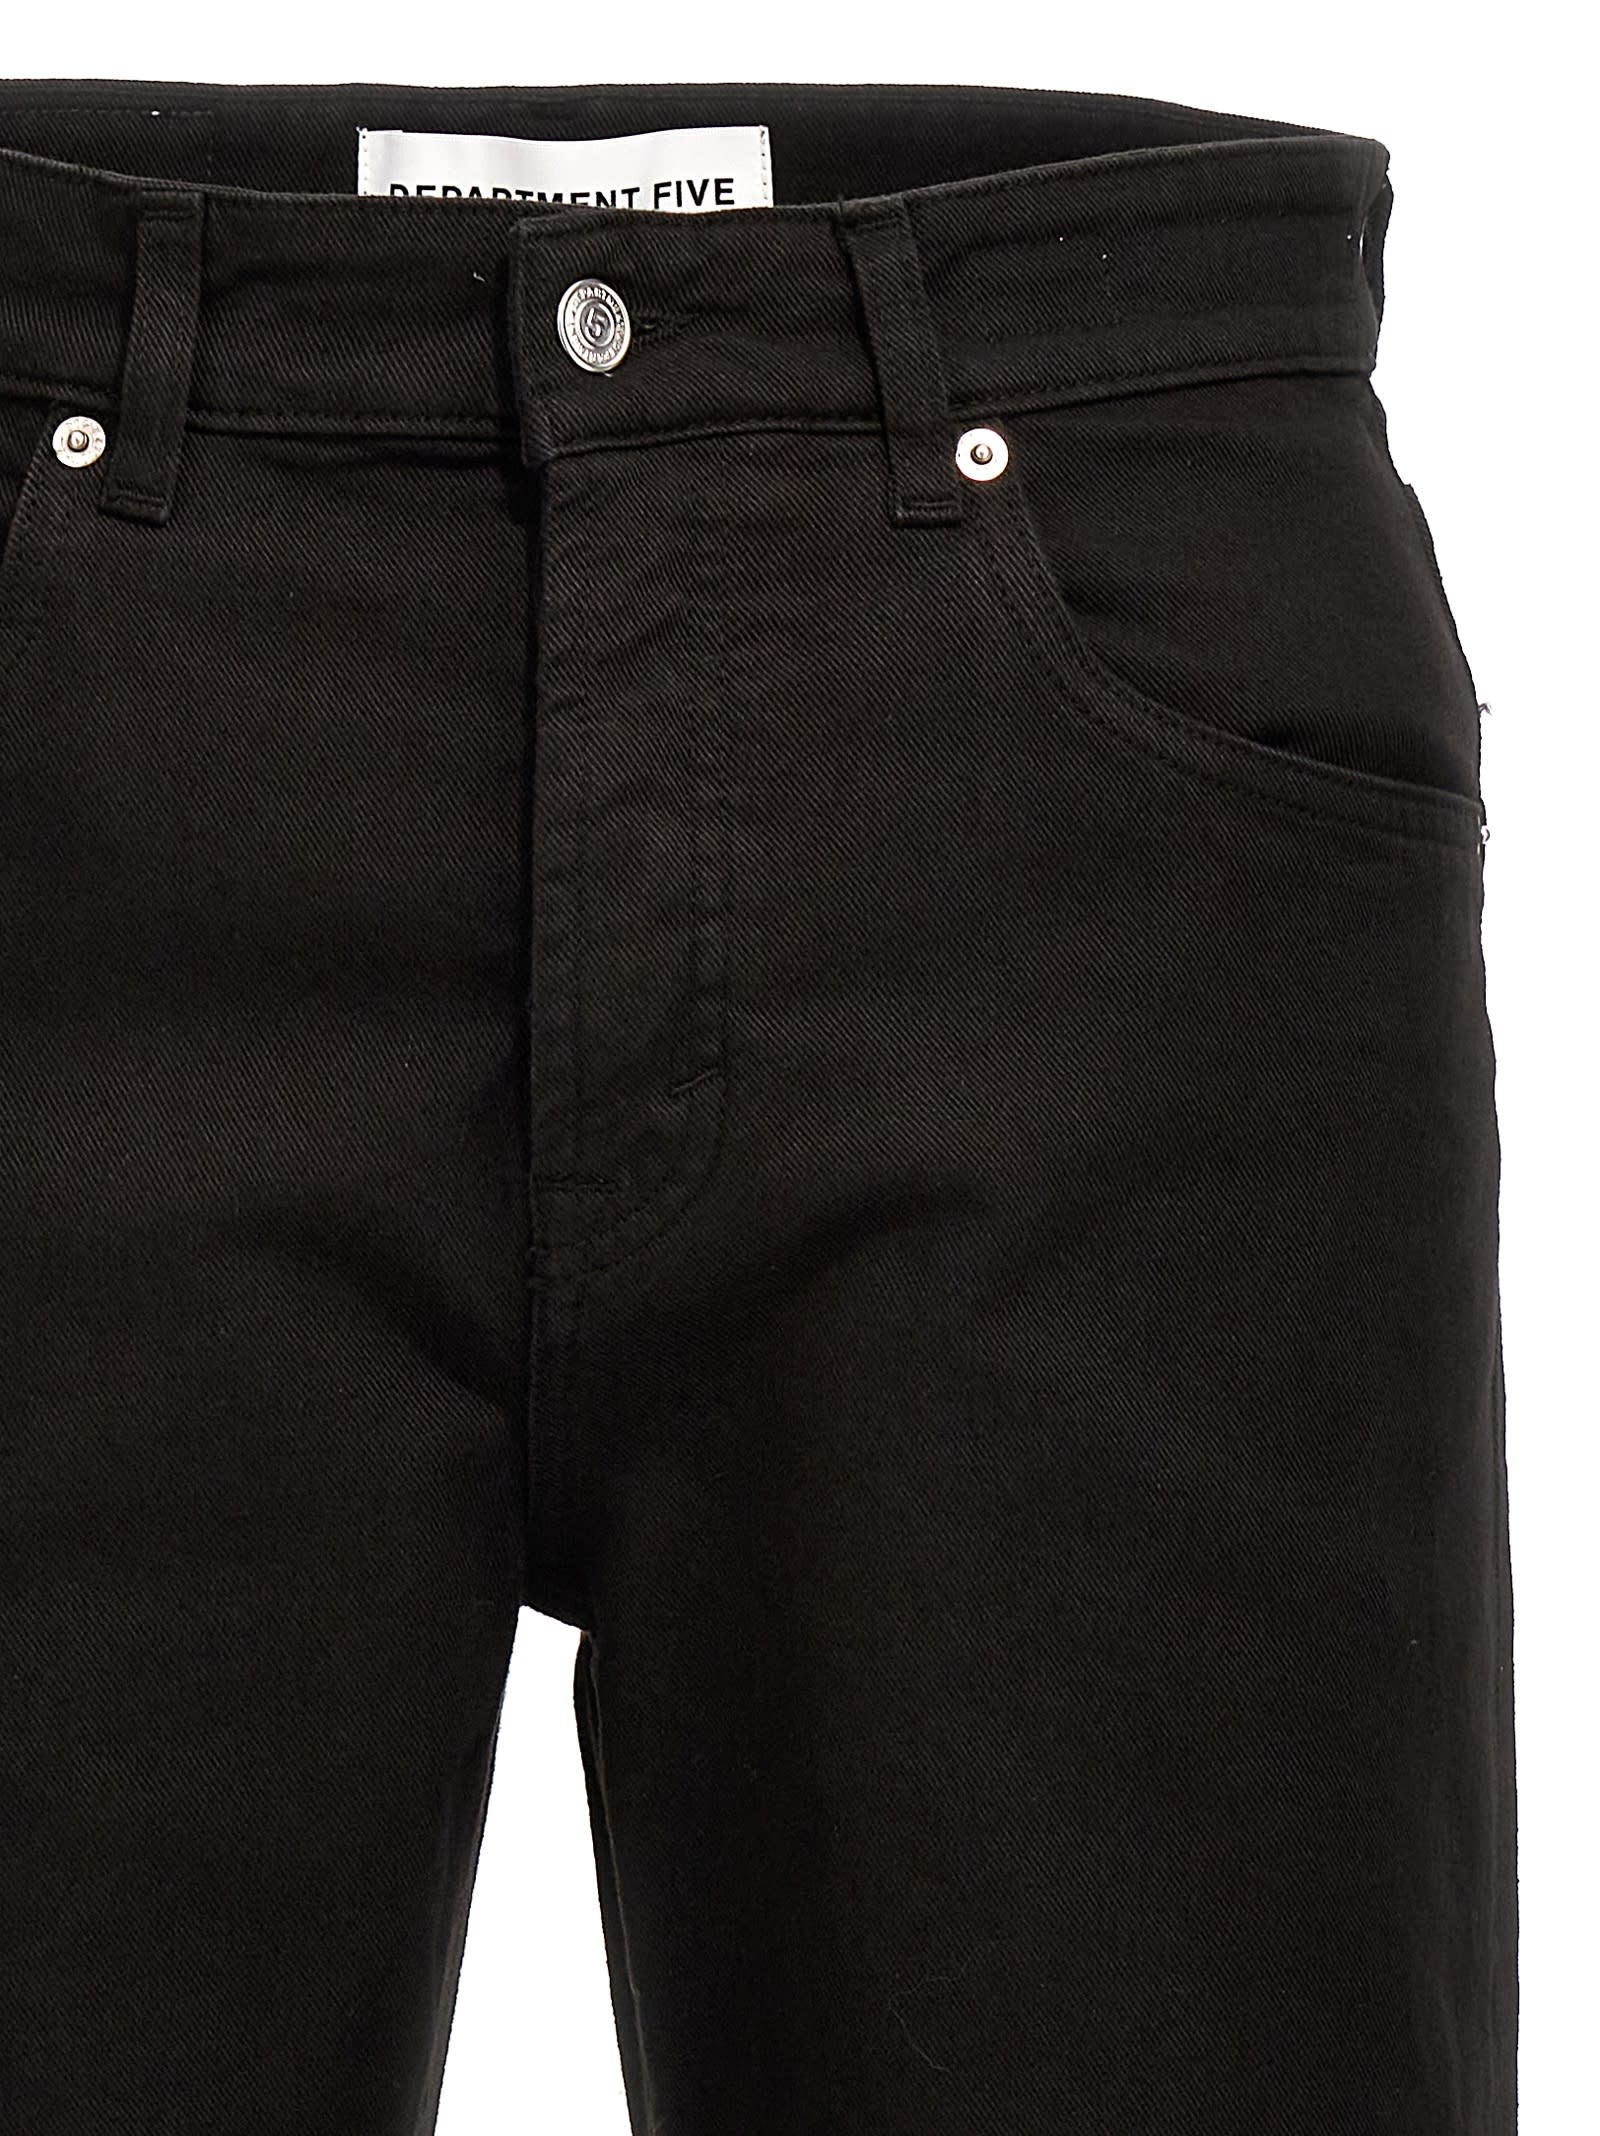 Shop Department Five Newman Jeans In Black